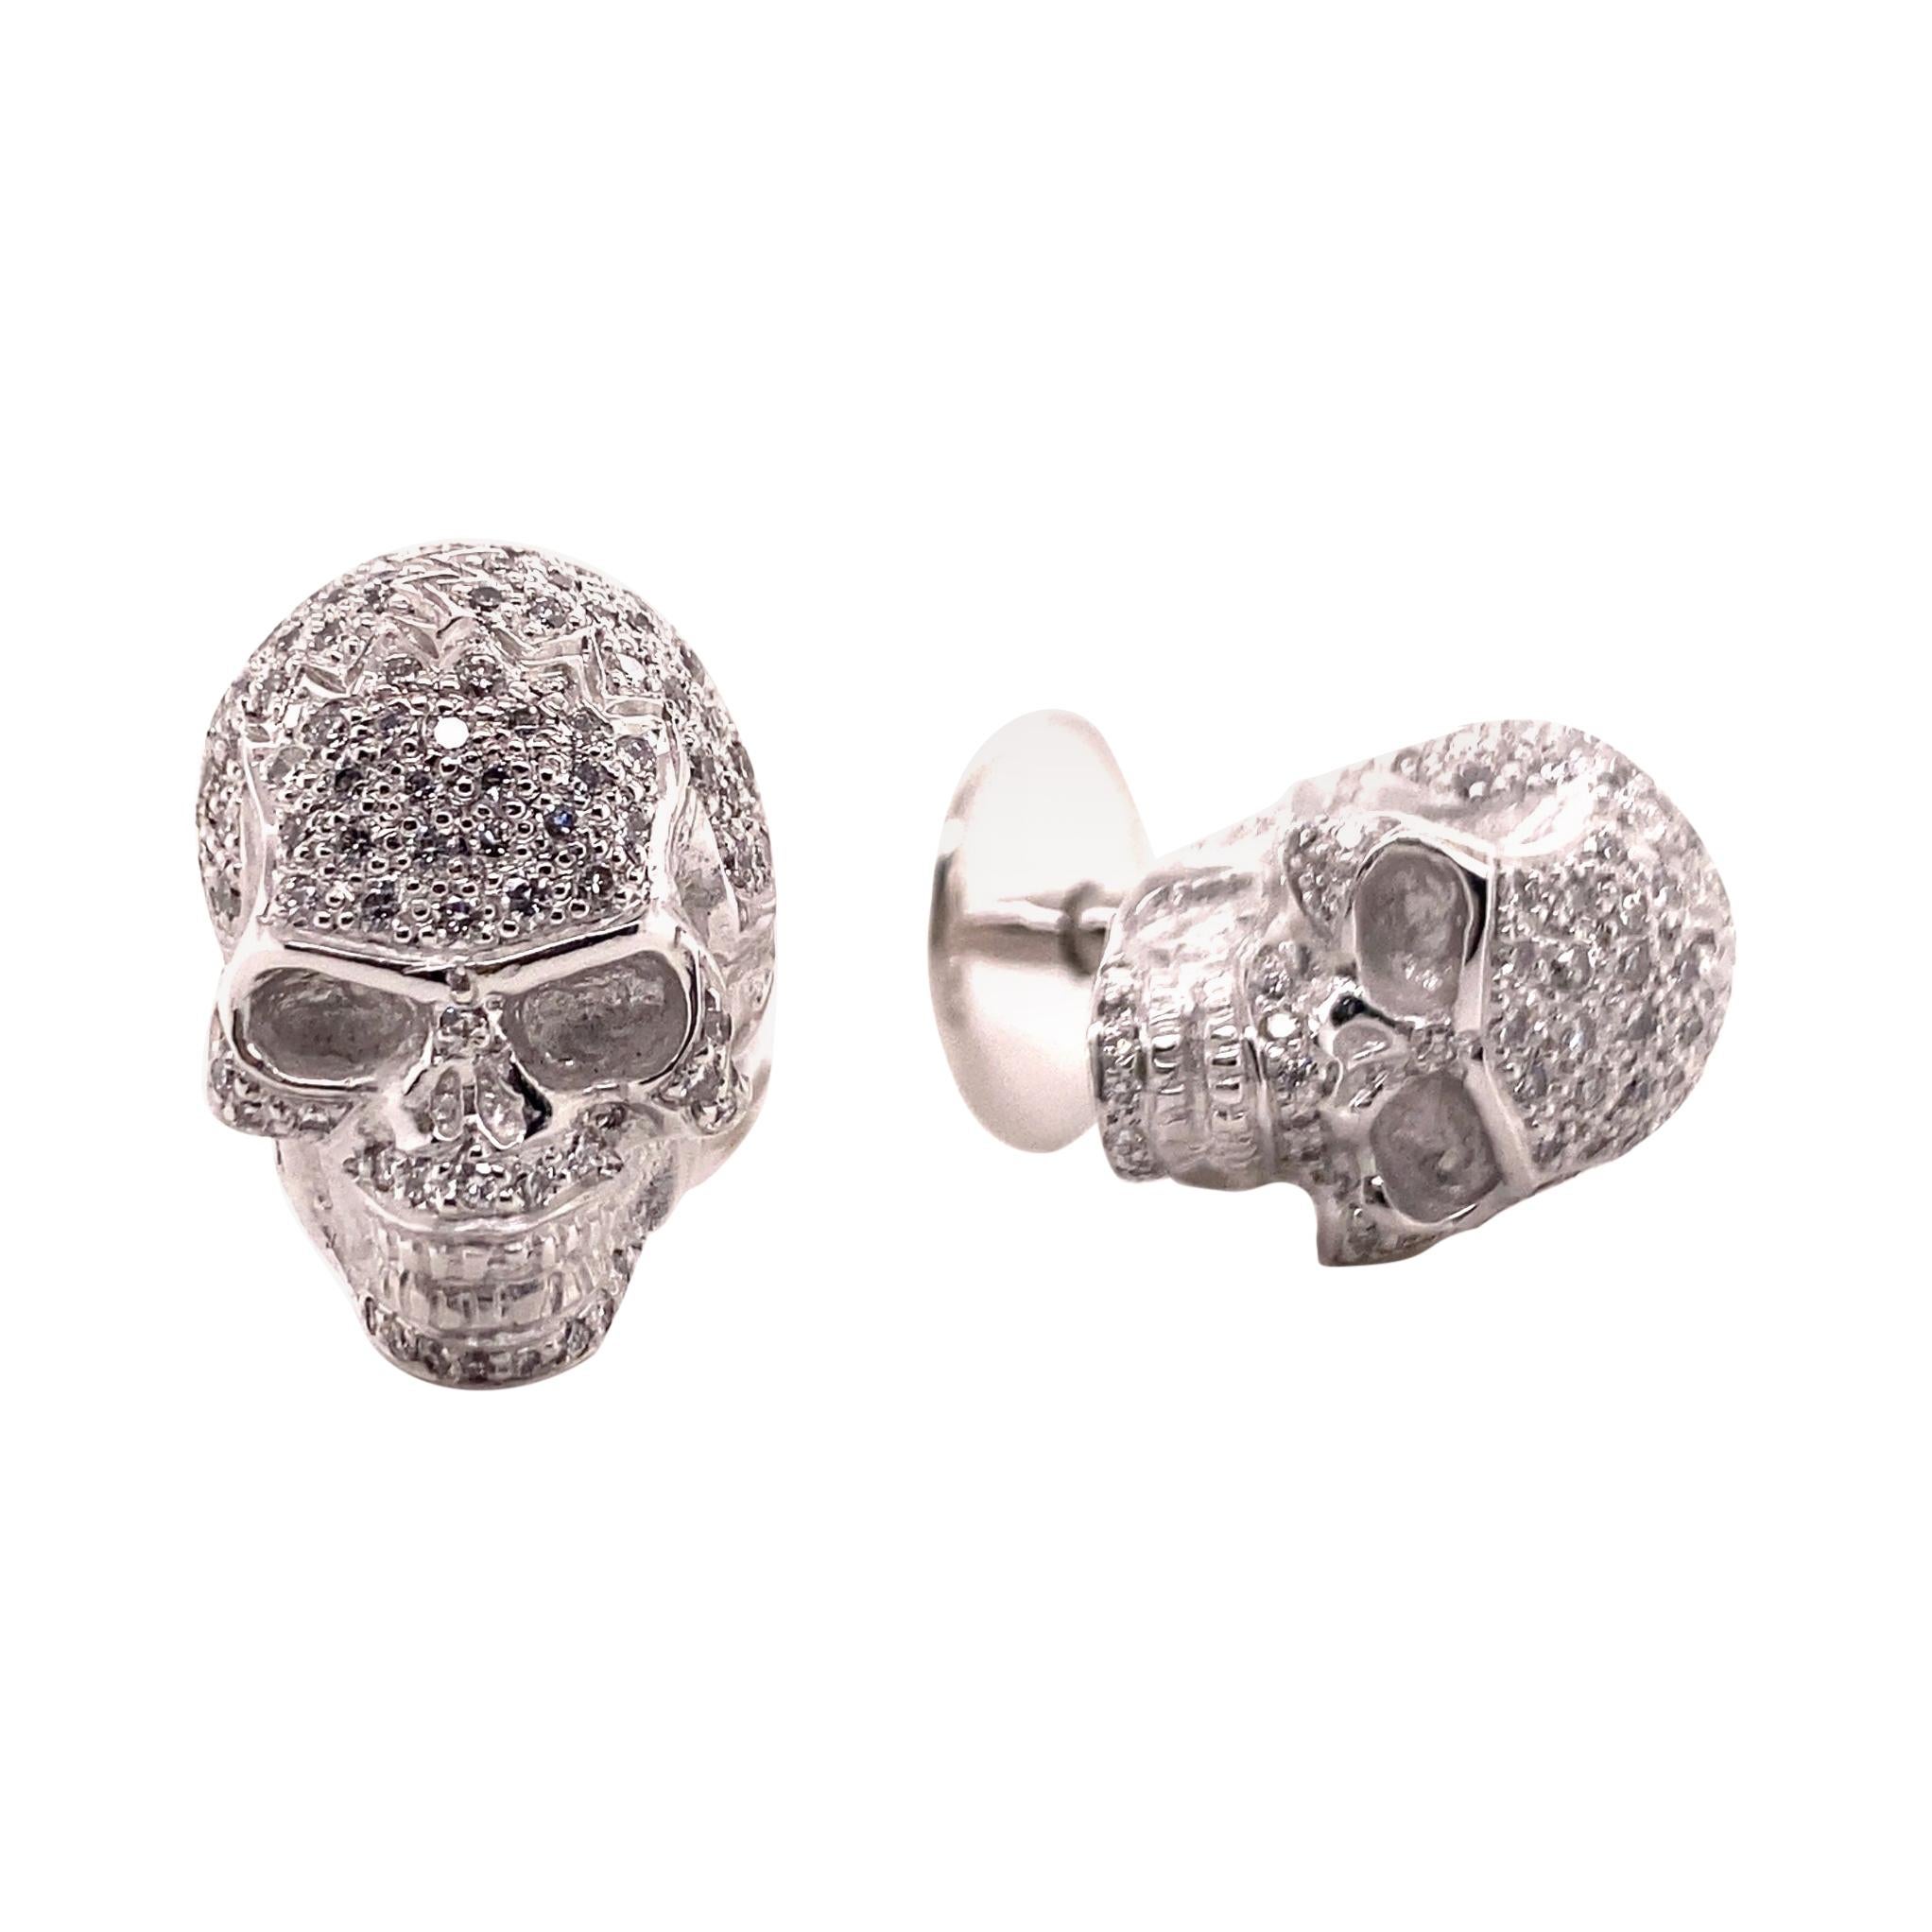 Skull Cufflinks with Diamonds in 18 Karat White Gold